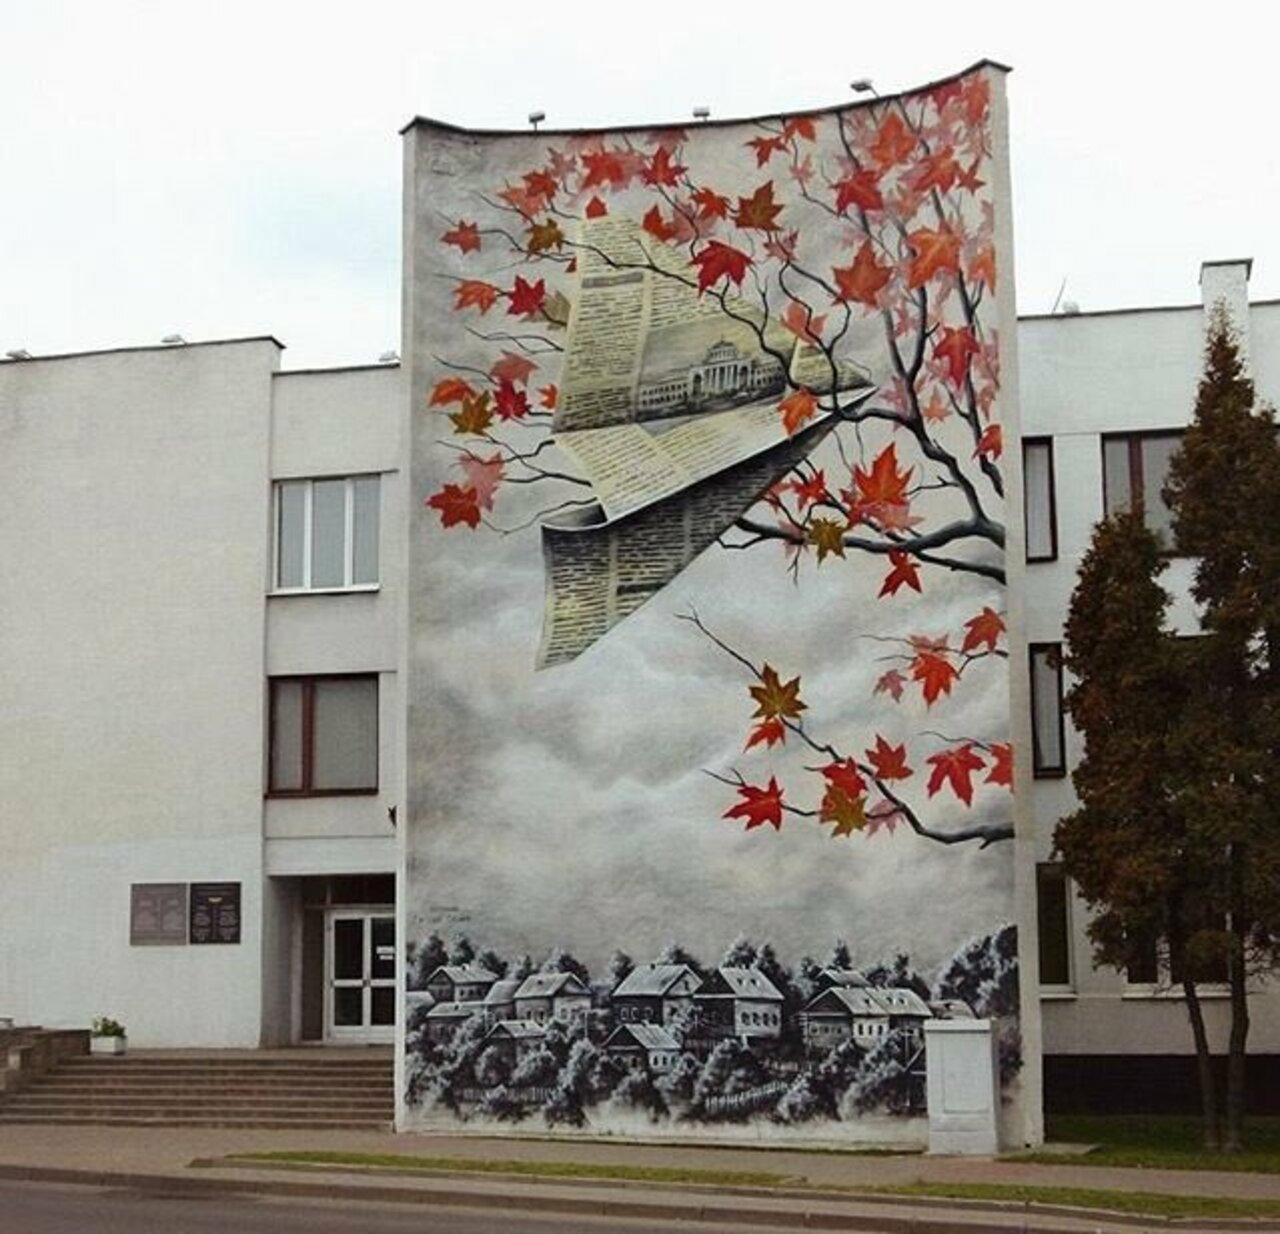 New tumblr post: "New Street Art by MUTUS in Belarus 

#art #graffiti #mural #streetart https://t.co/icfREwk12c" http://ift.tt/1OSEMzg ,…